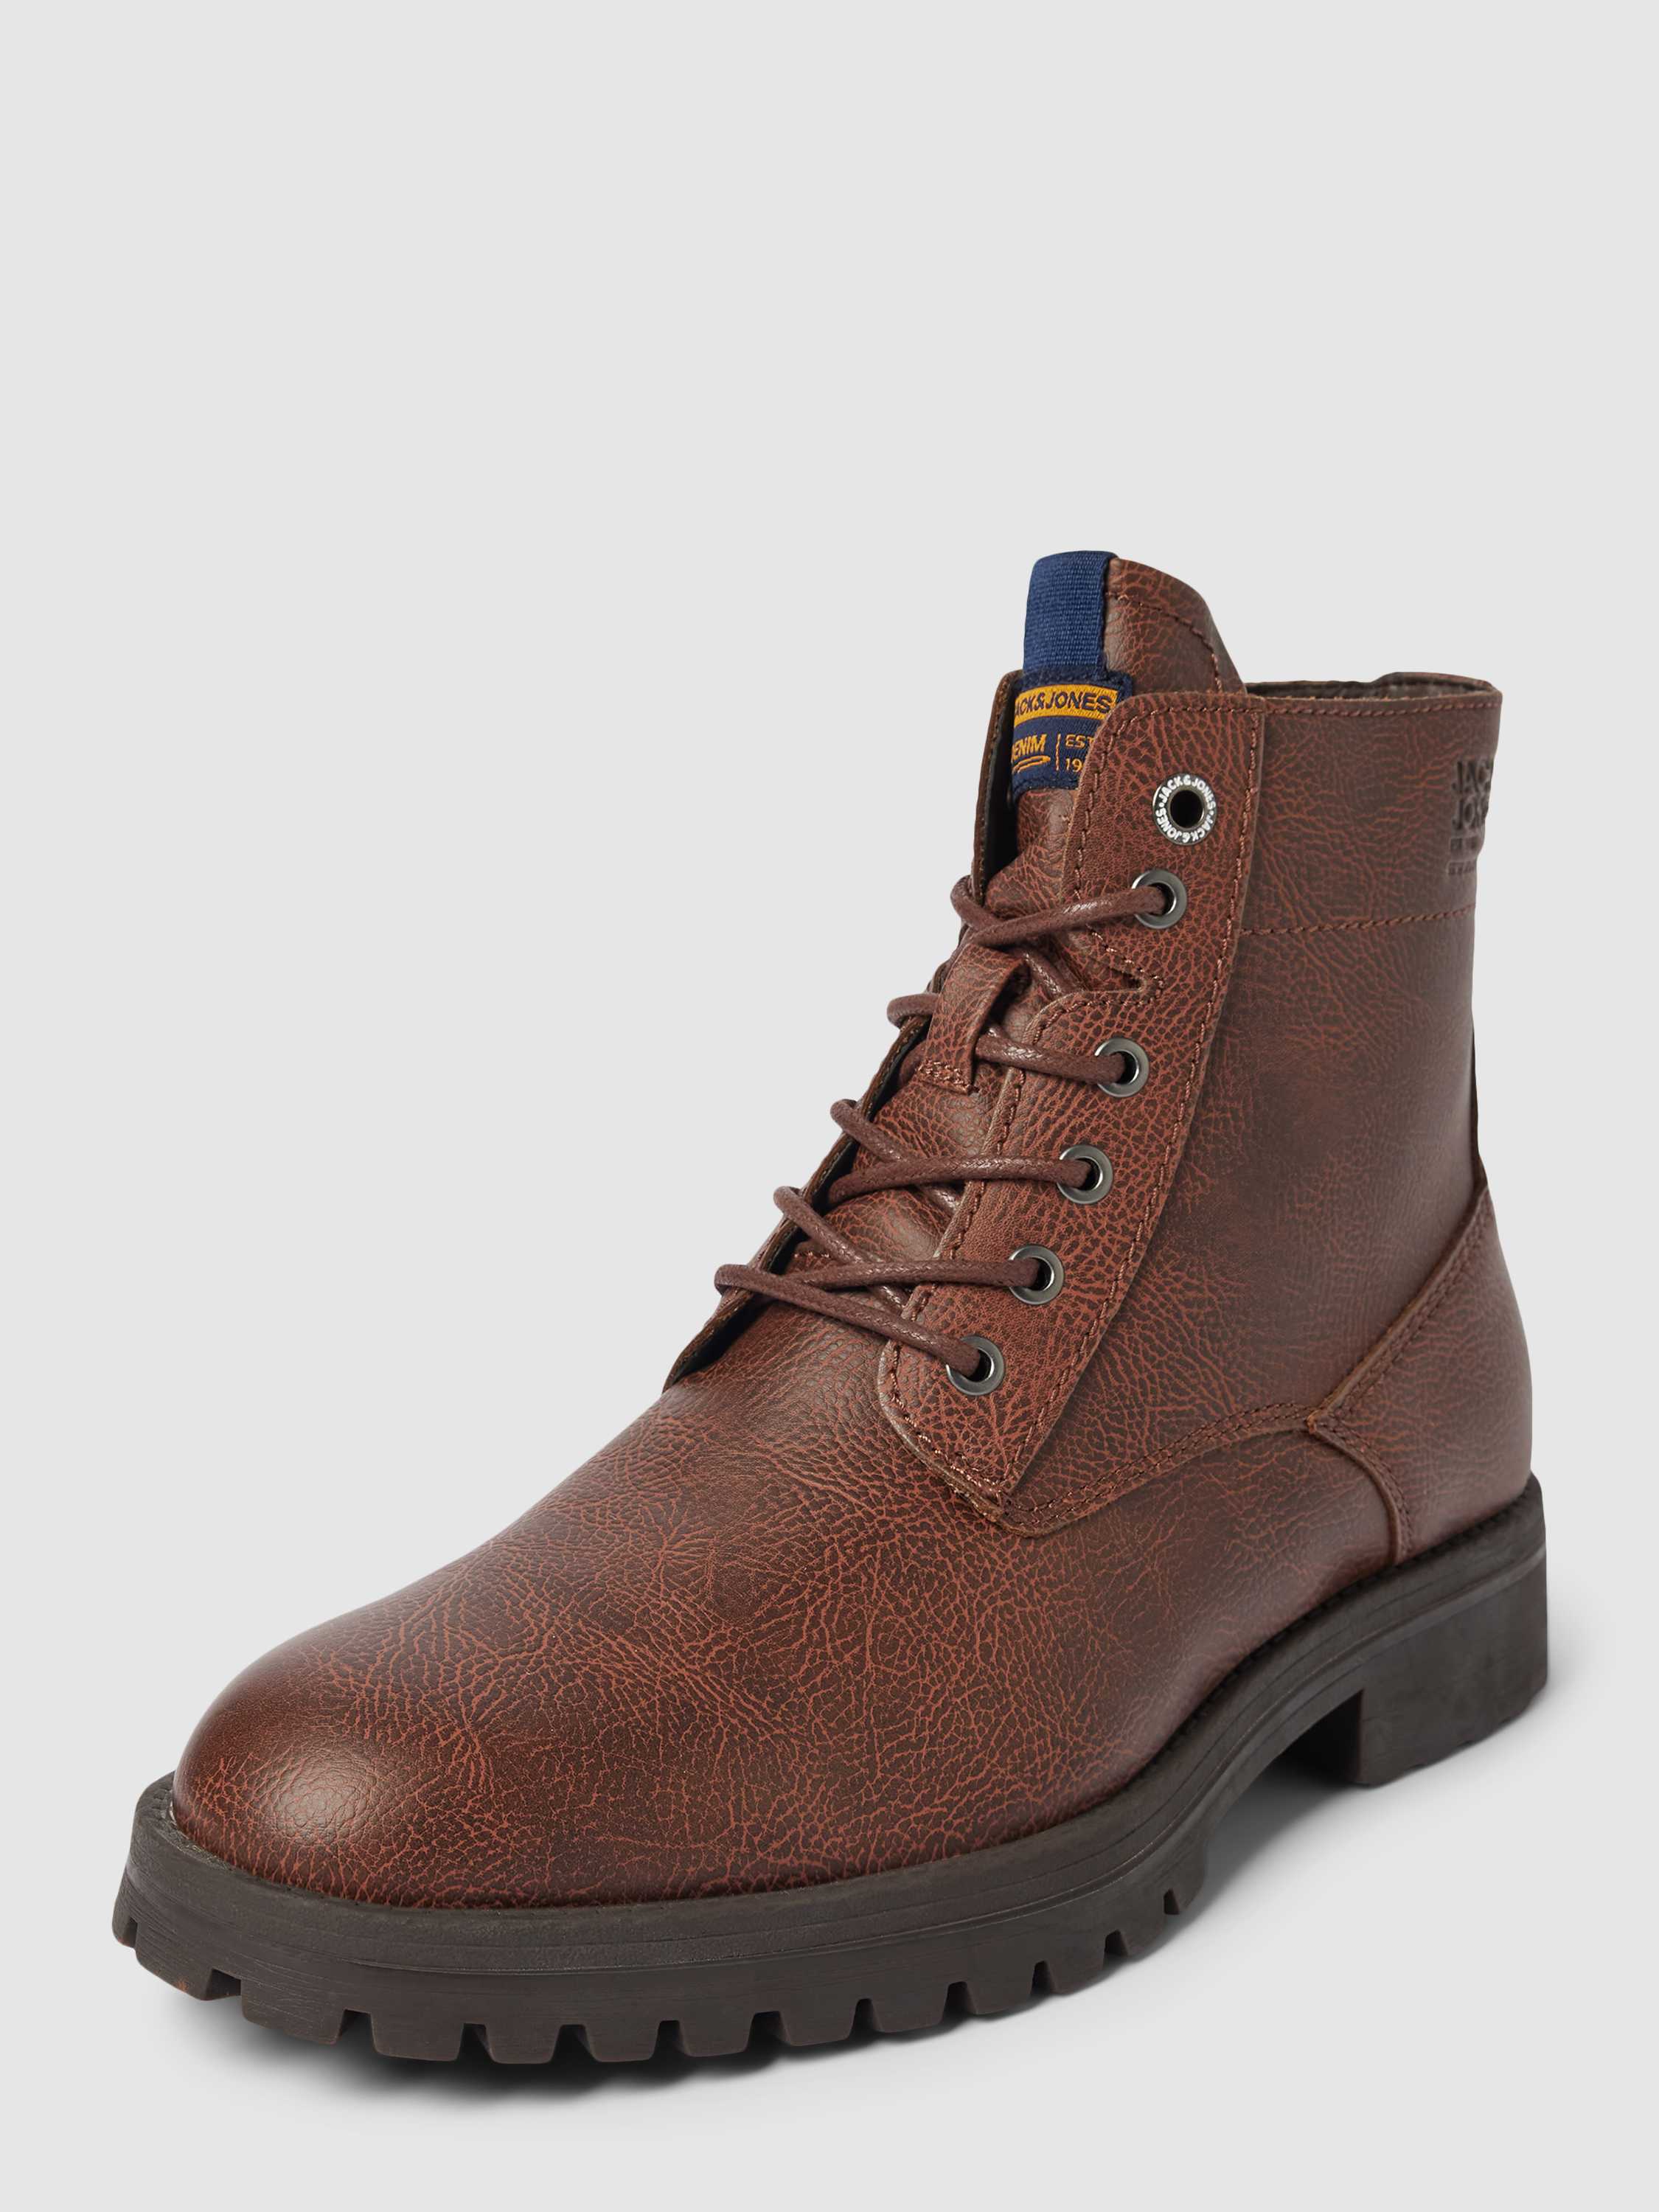 Boots mit Label-Detail Modell 'BERNIE', Peek & Cloppenburg